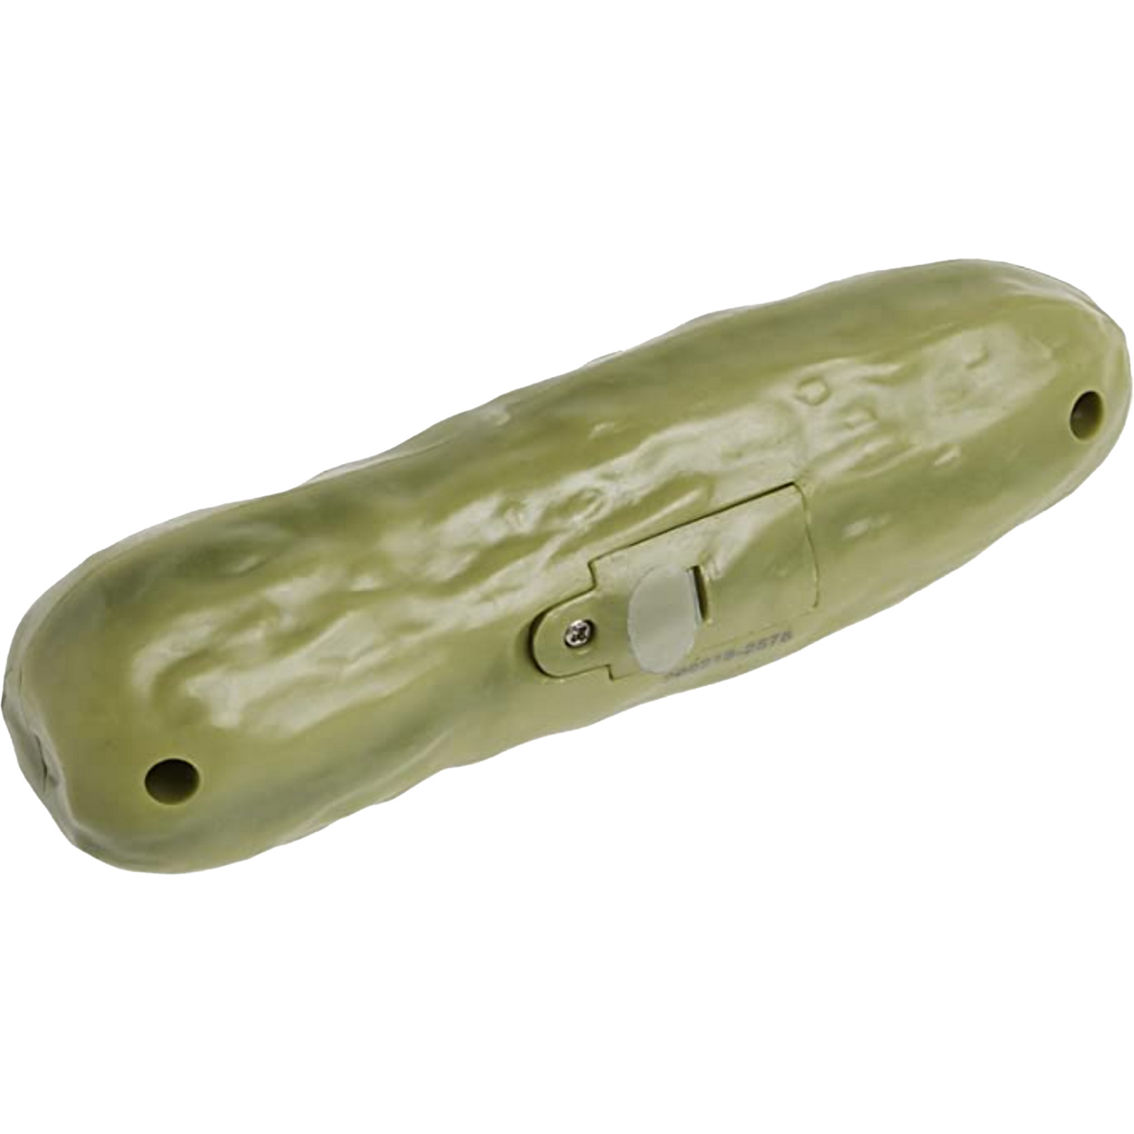 Yodeling Pickle - Image 3 of 3